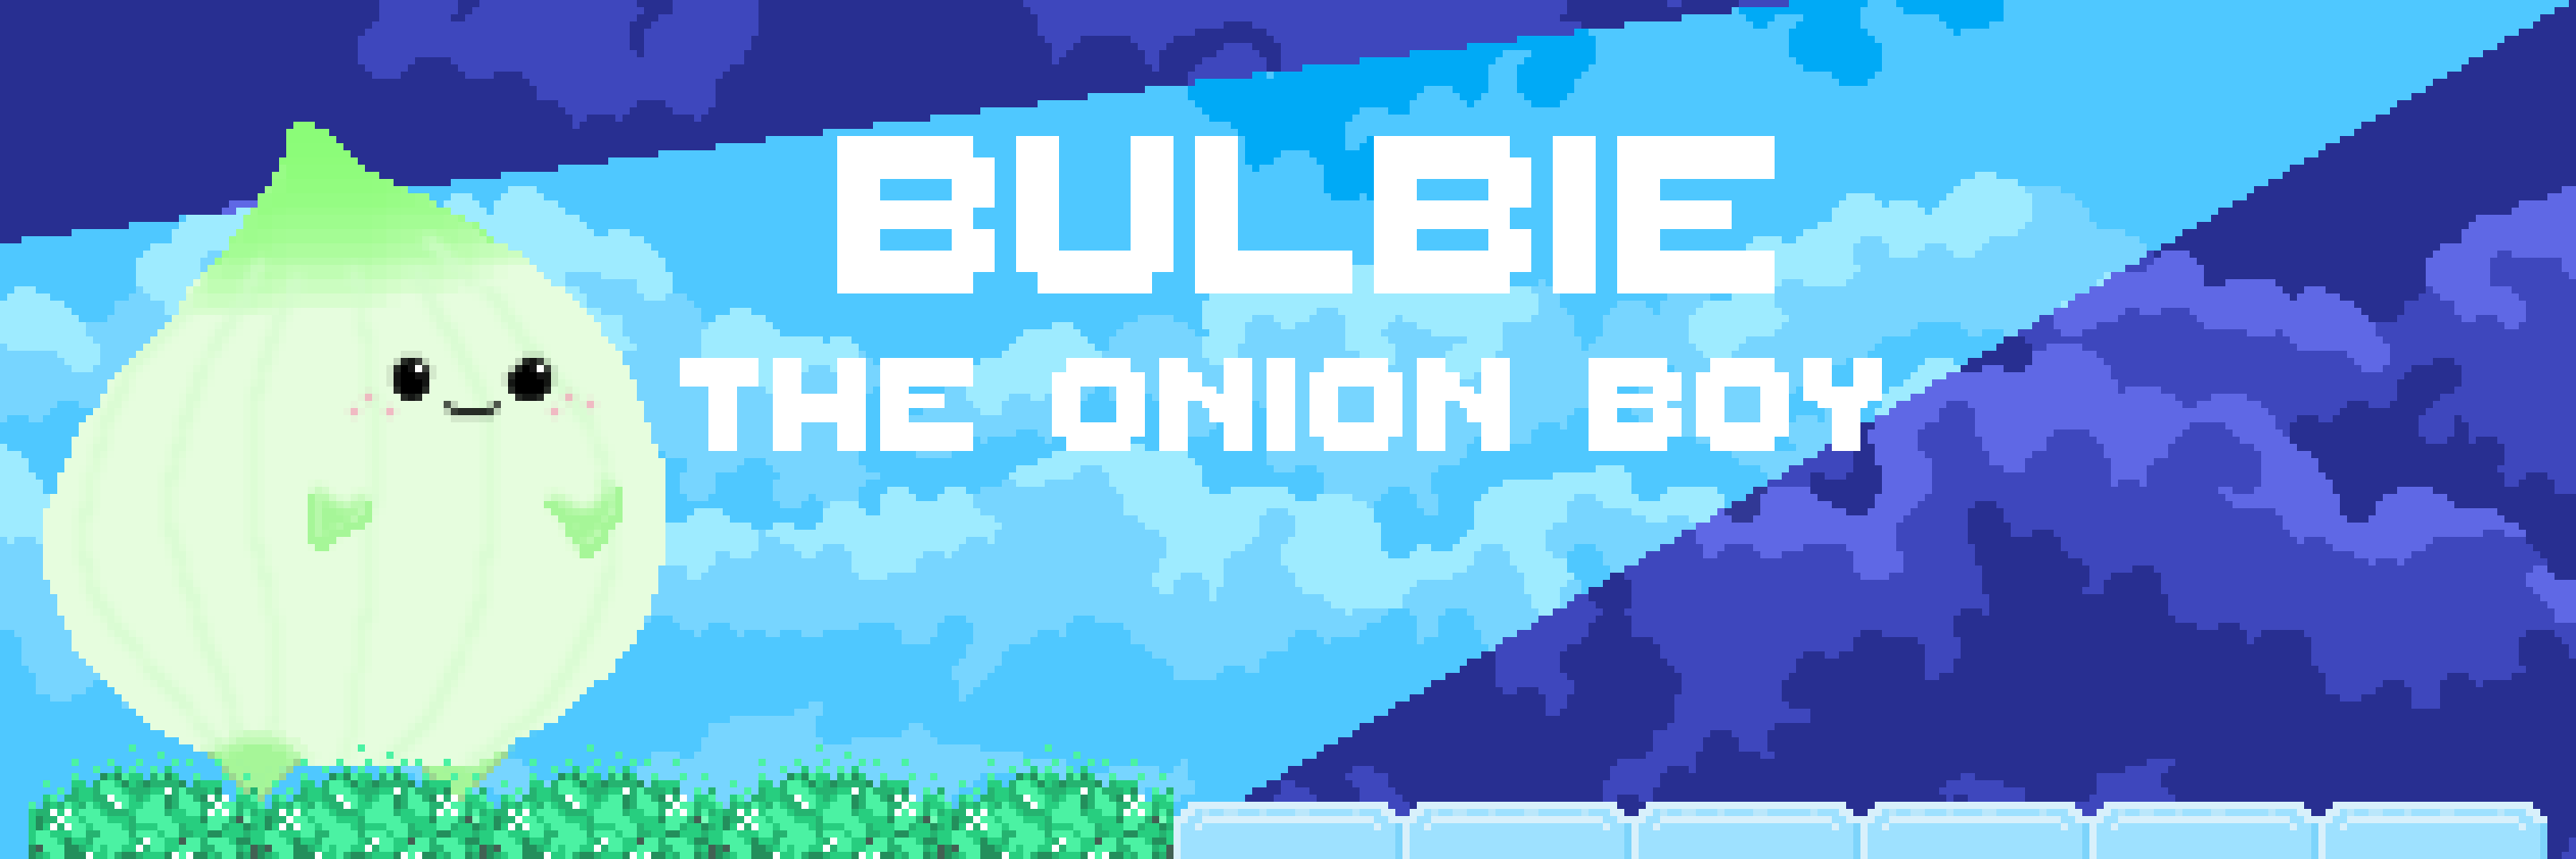 Bulbie: The Onion Boy